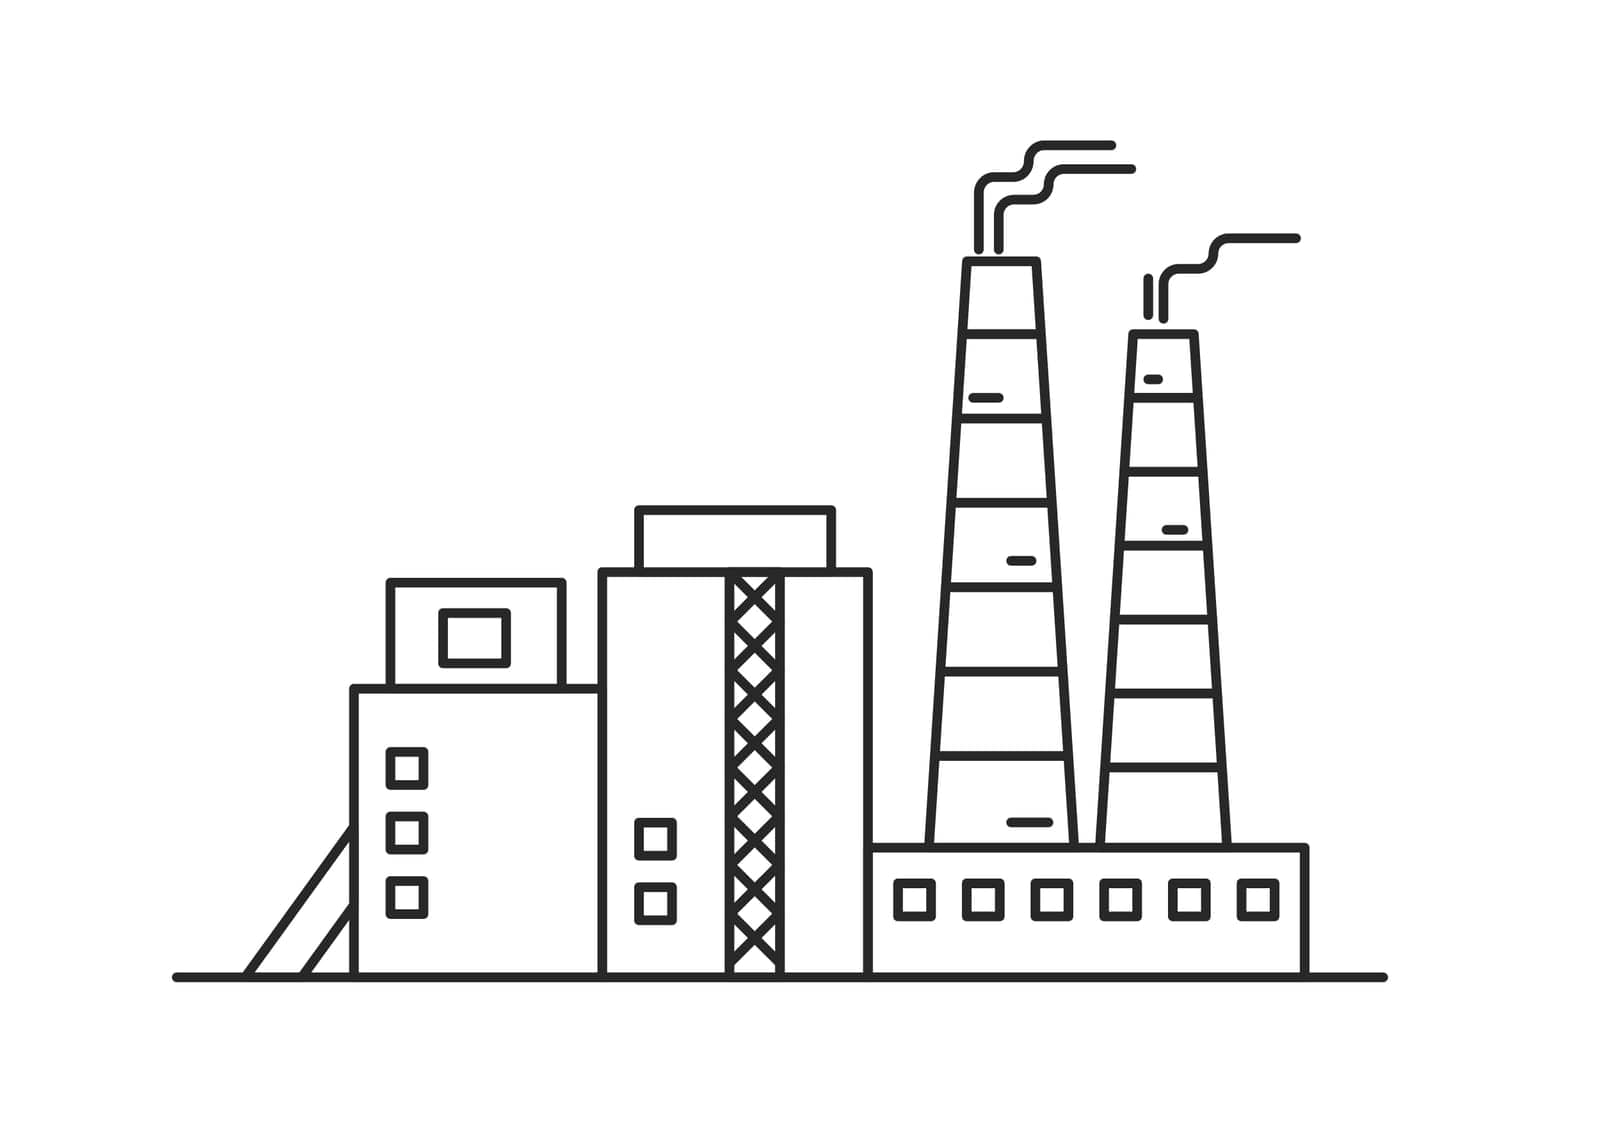 Industrial power plant architecture. Factory production building vector outline illustration